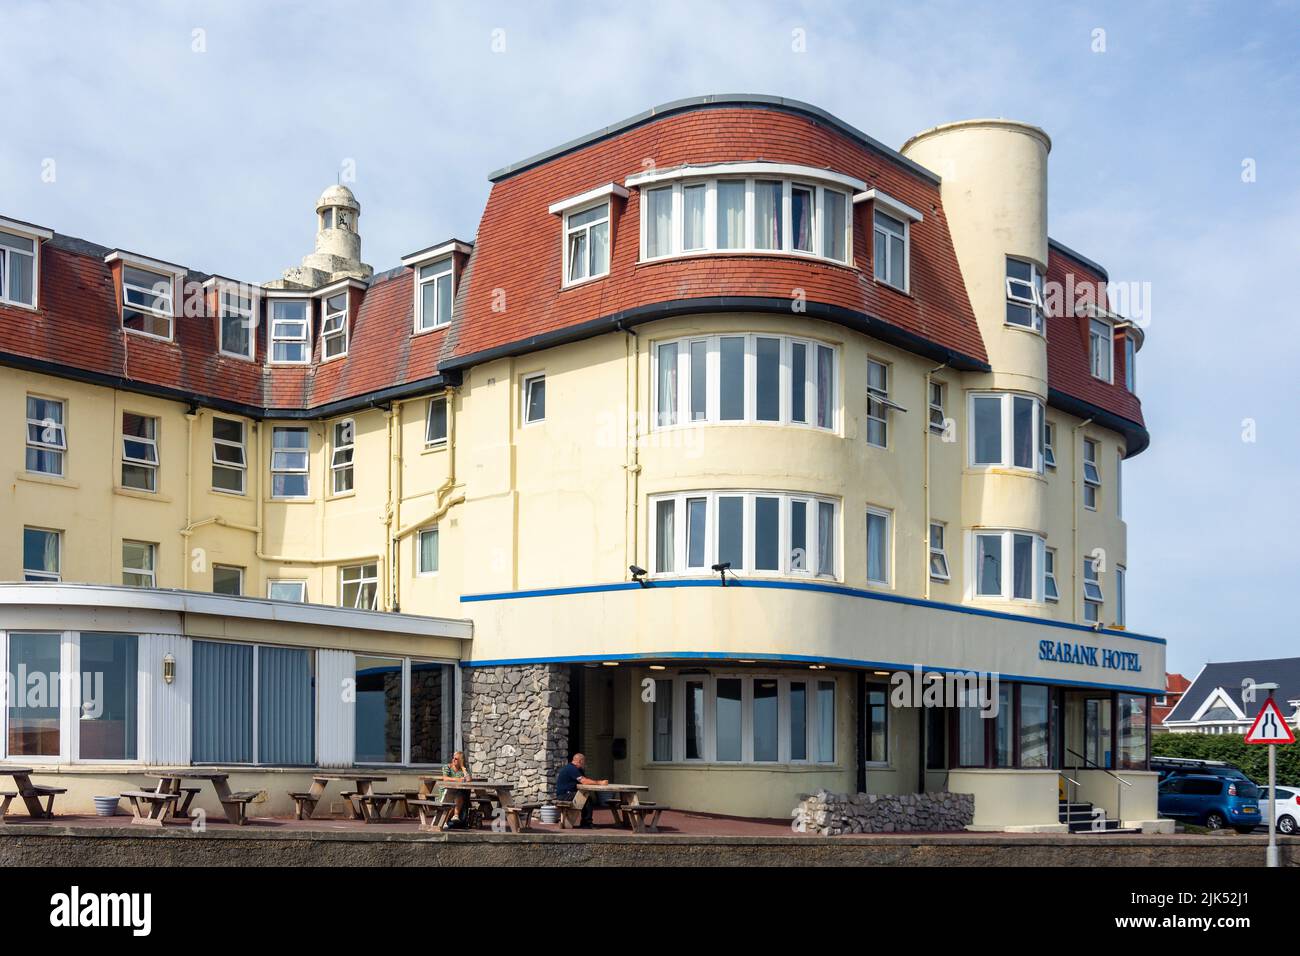 Seabank Hotel, Esplanade, Porthcawl, Bridgend County Borough (Pen-y-bont), Wales (Cymru), United Kingdom Stock Photo